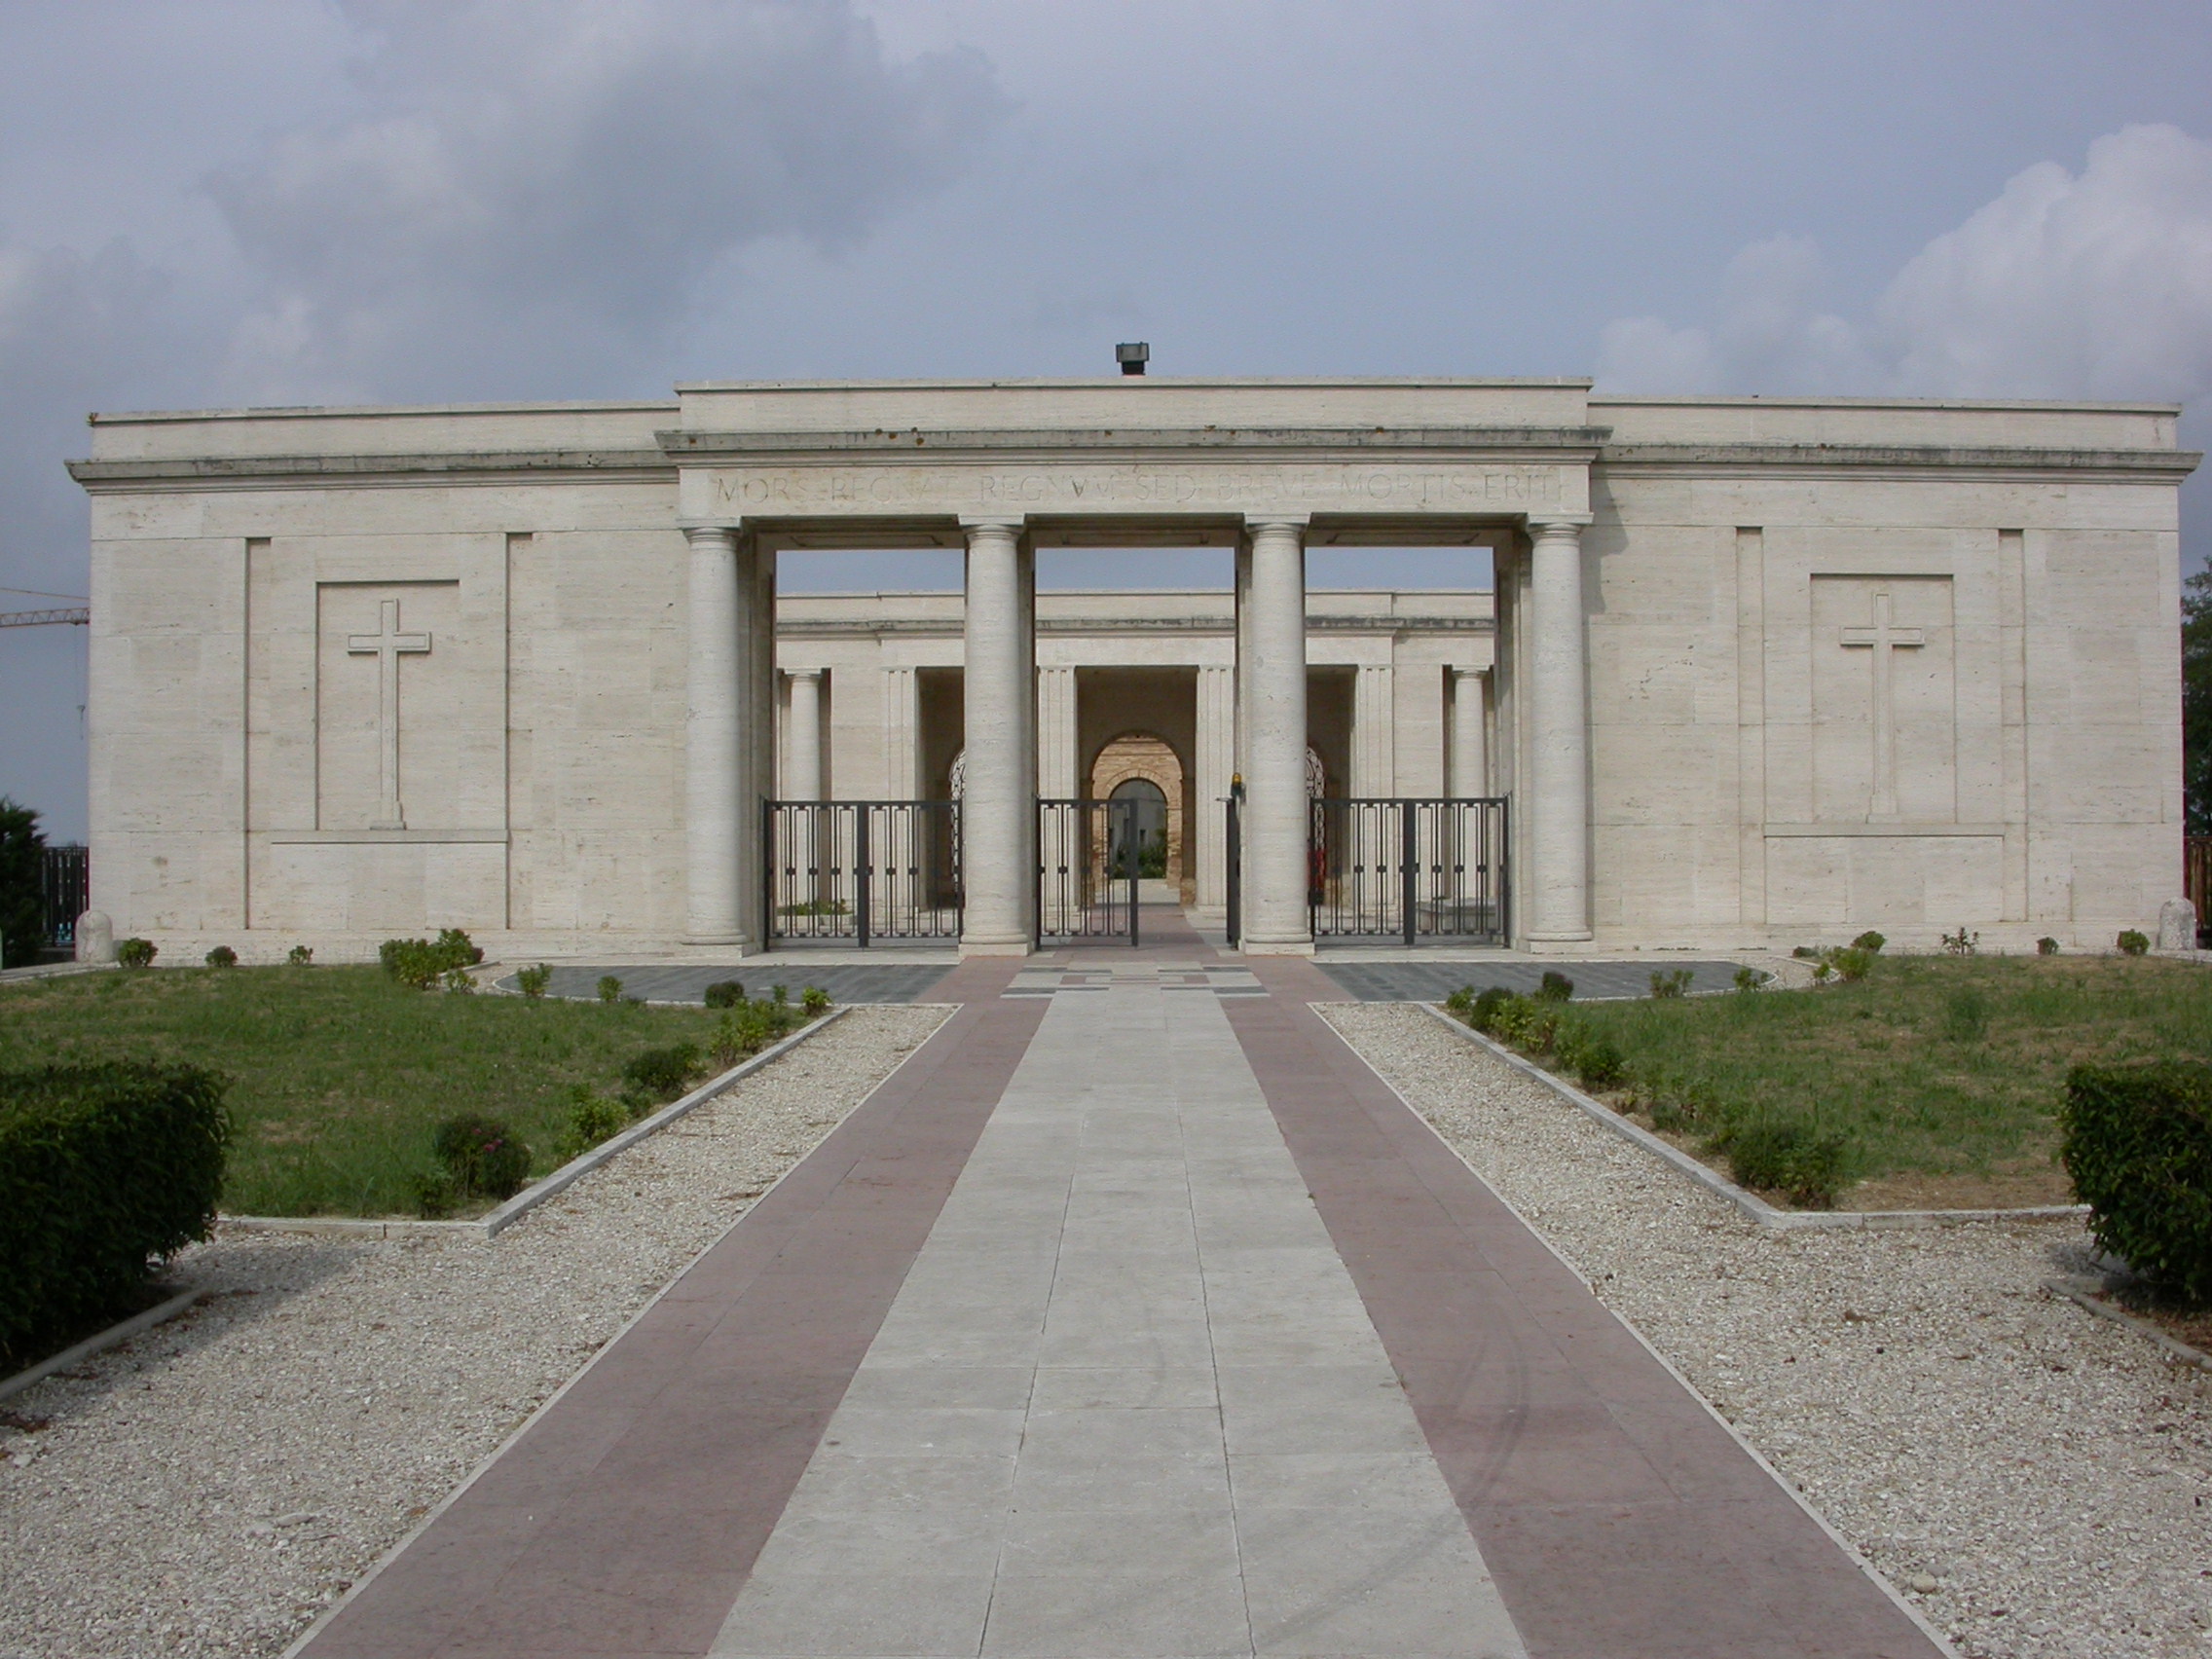 Ingresso del Cimitero (ingresso monumentale) - Ripatransone (AP) 